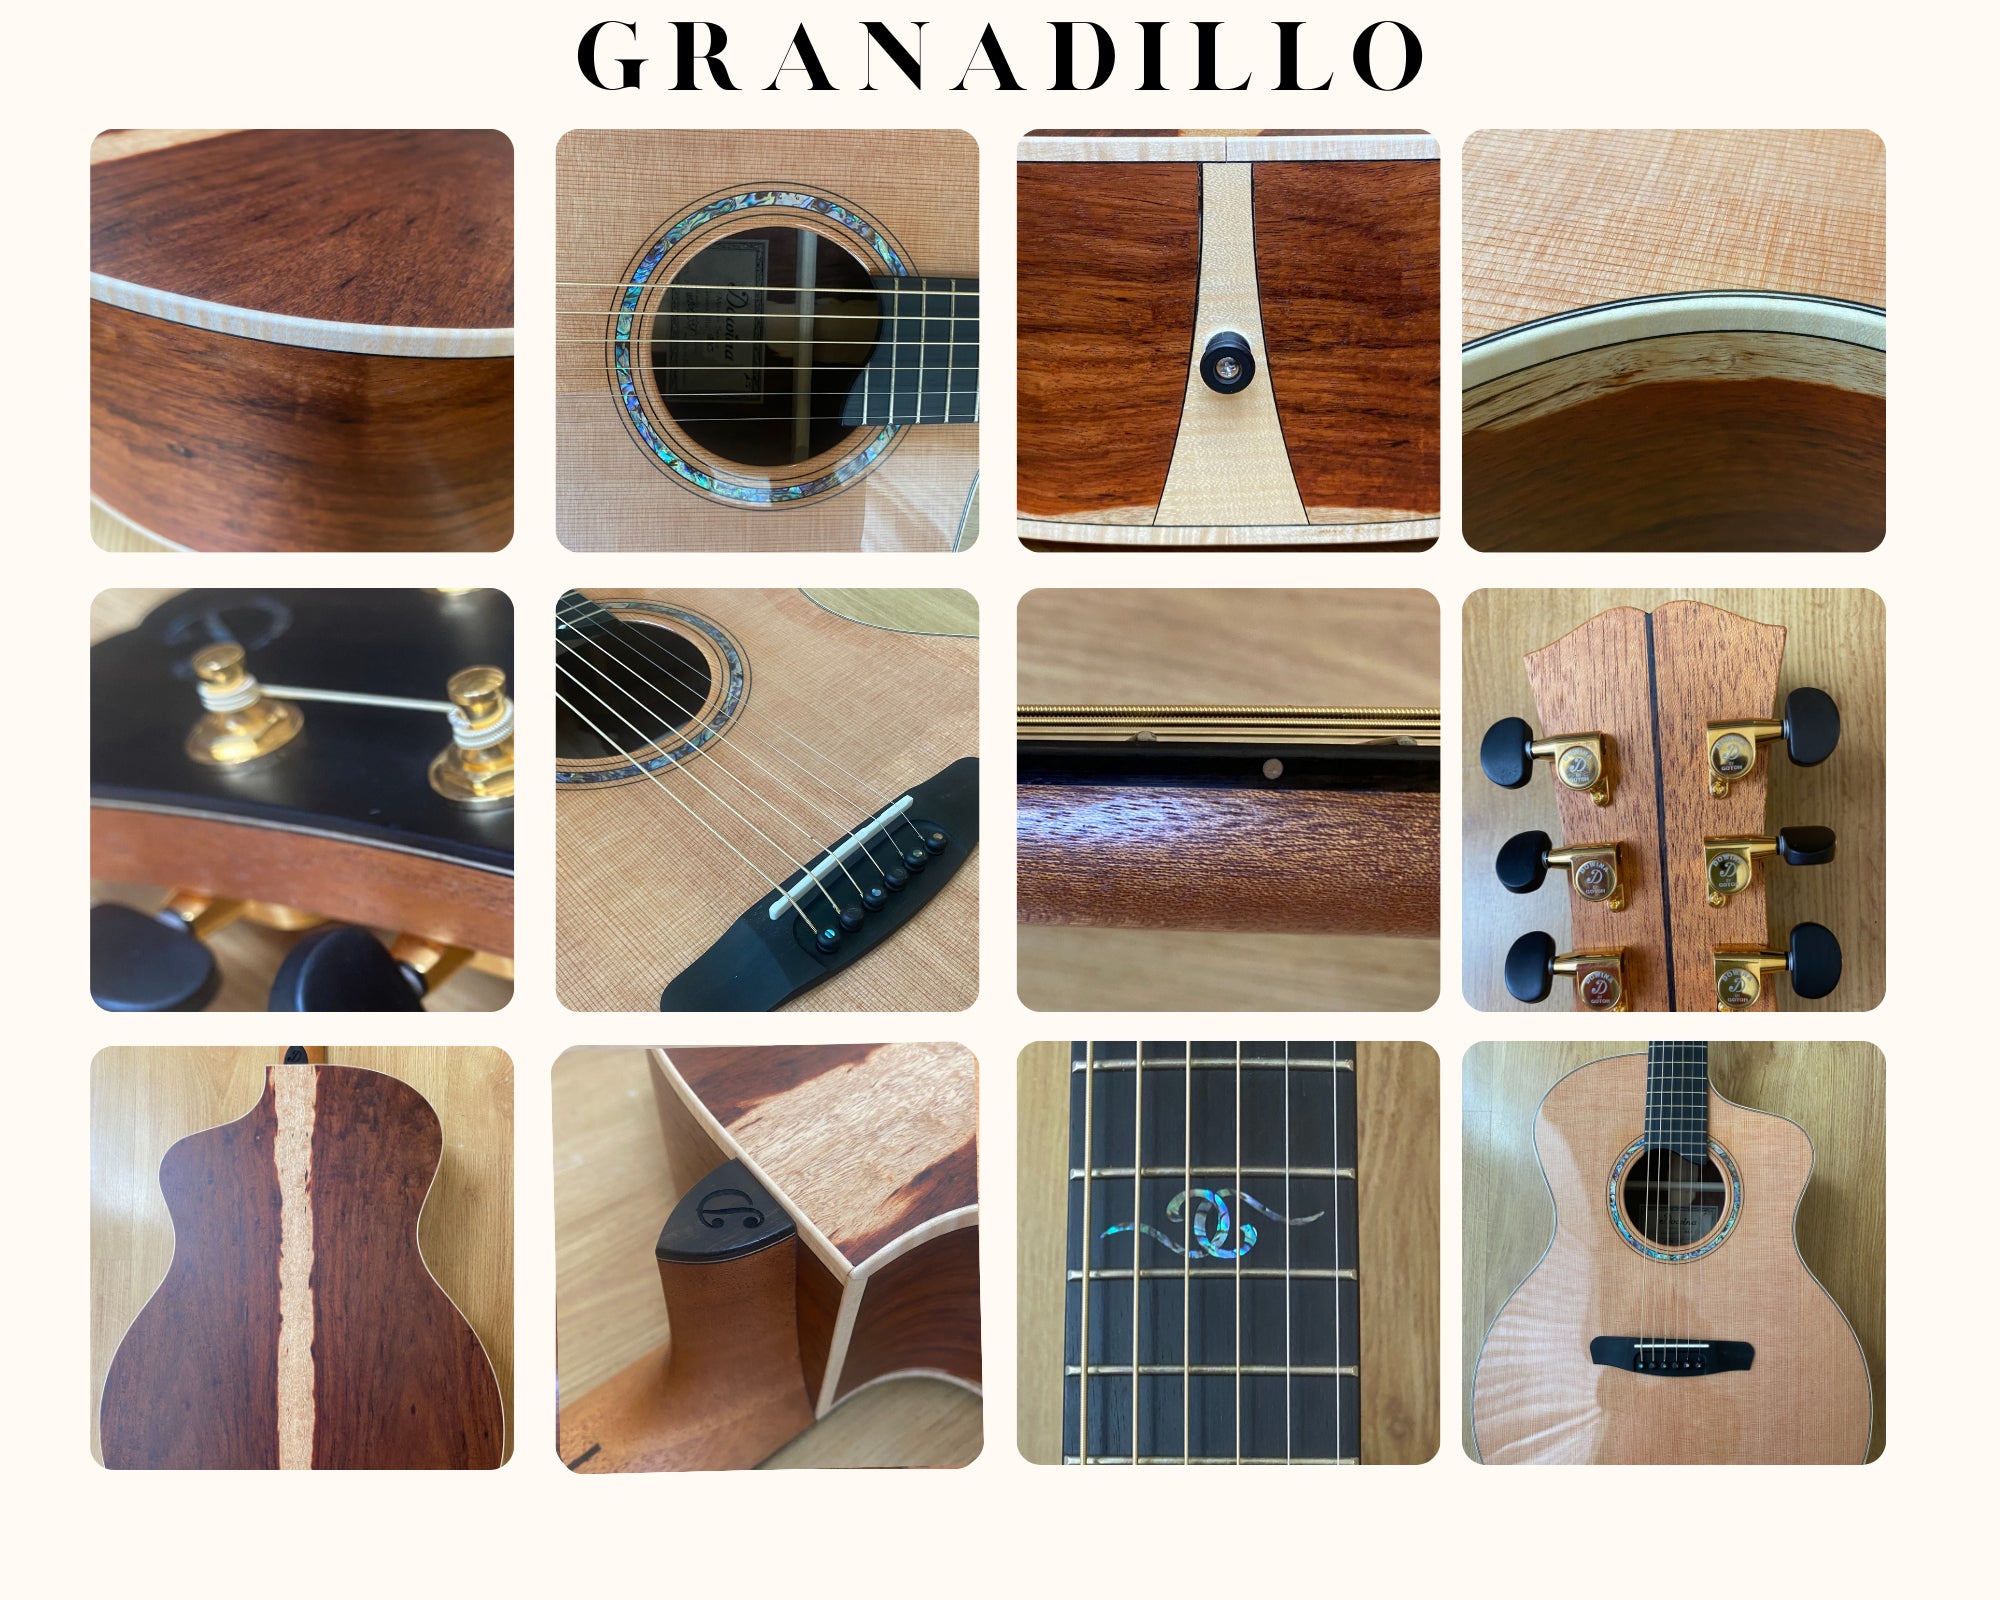 Dowina Granadillo GAC DS, Acoustic Guitar for sale at Richards Guitars.